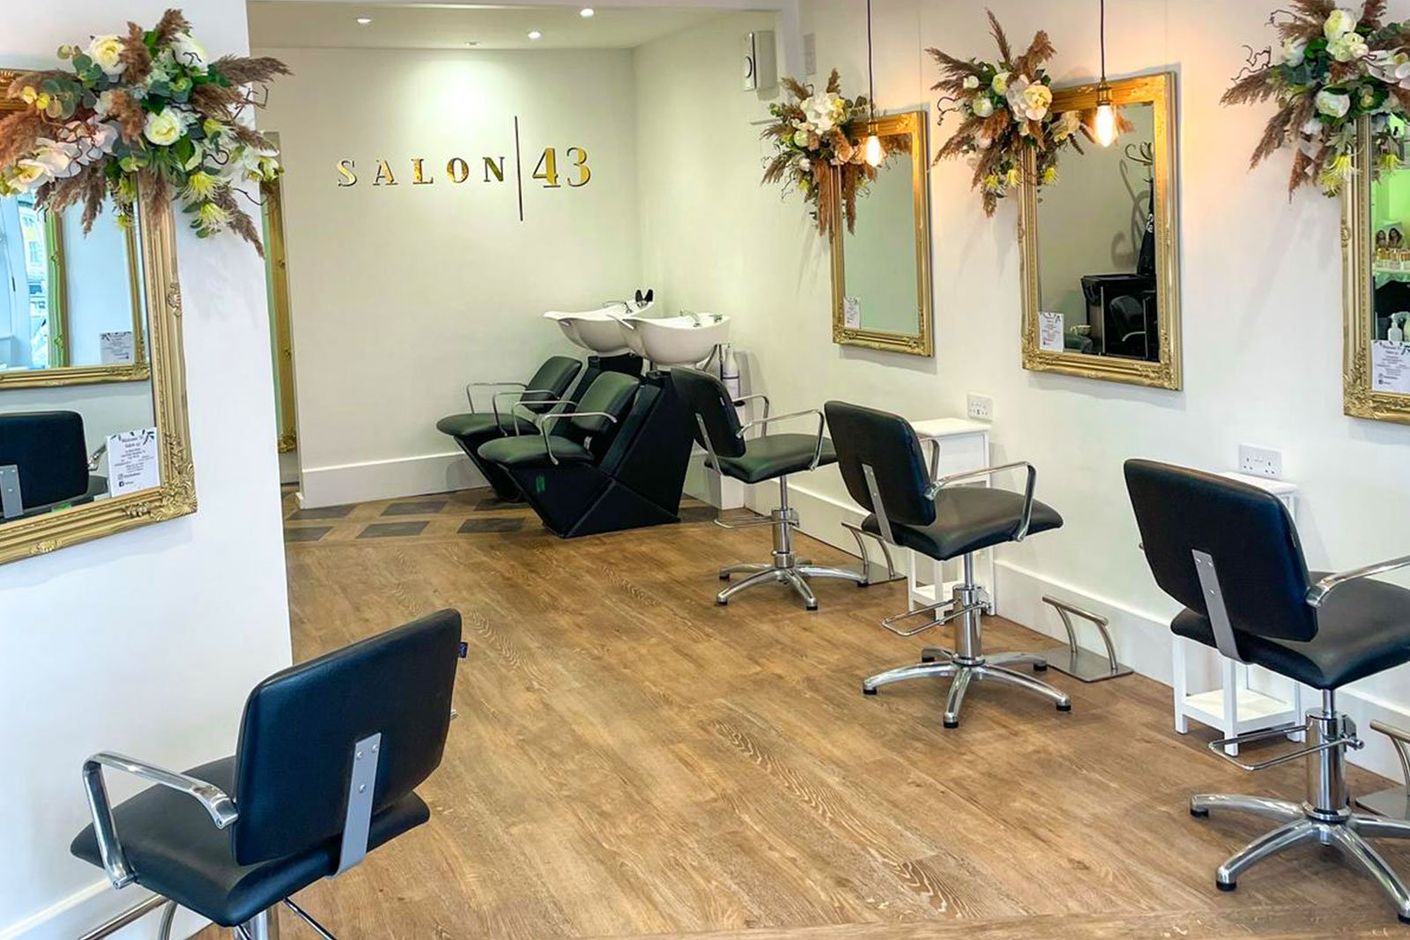 Salon 43 Interior in Kingsbridge